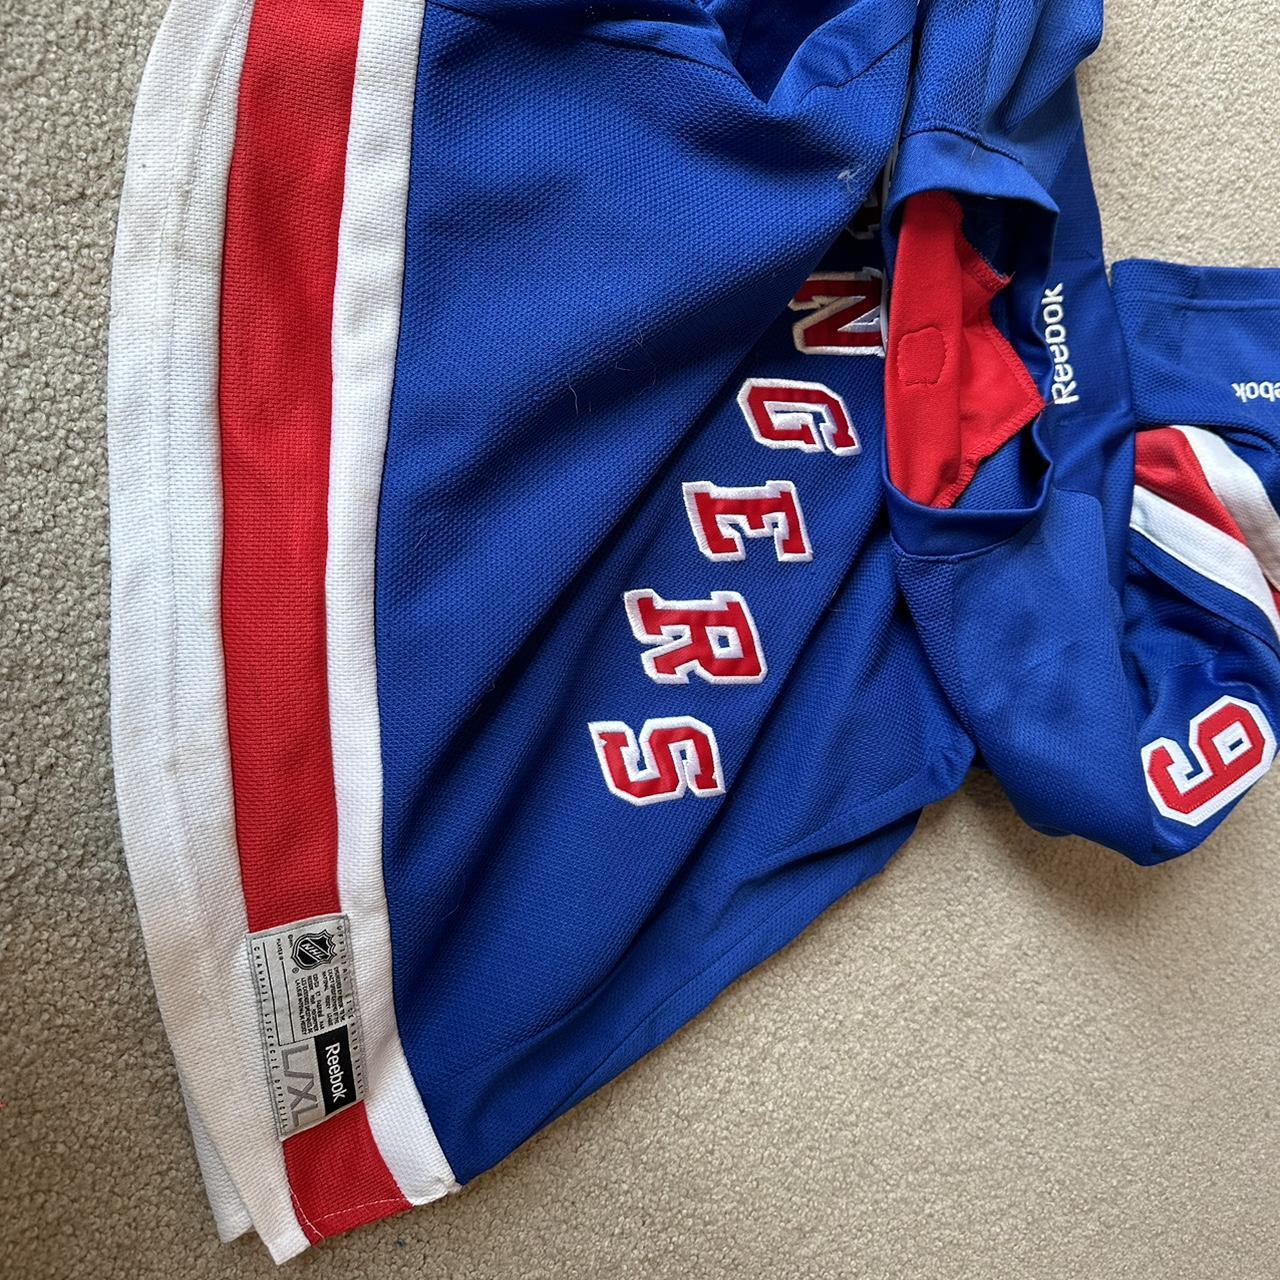 Massively rare New York Rangers hockey jersey - Depop